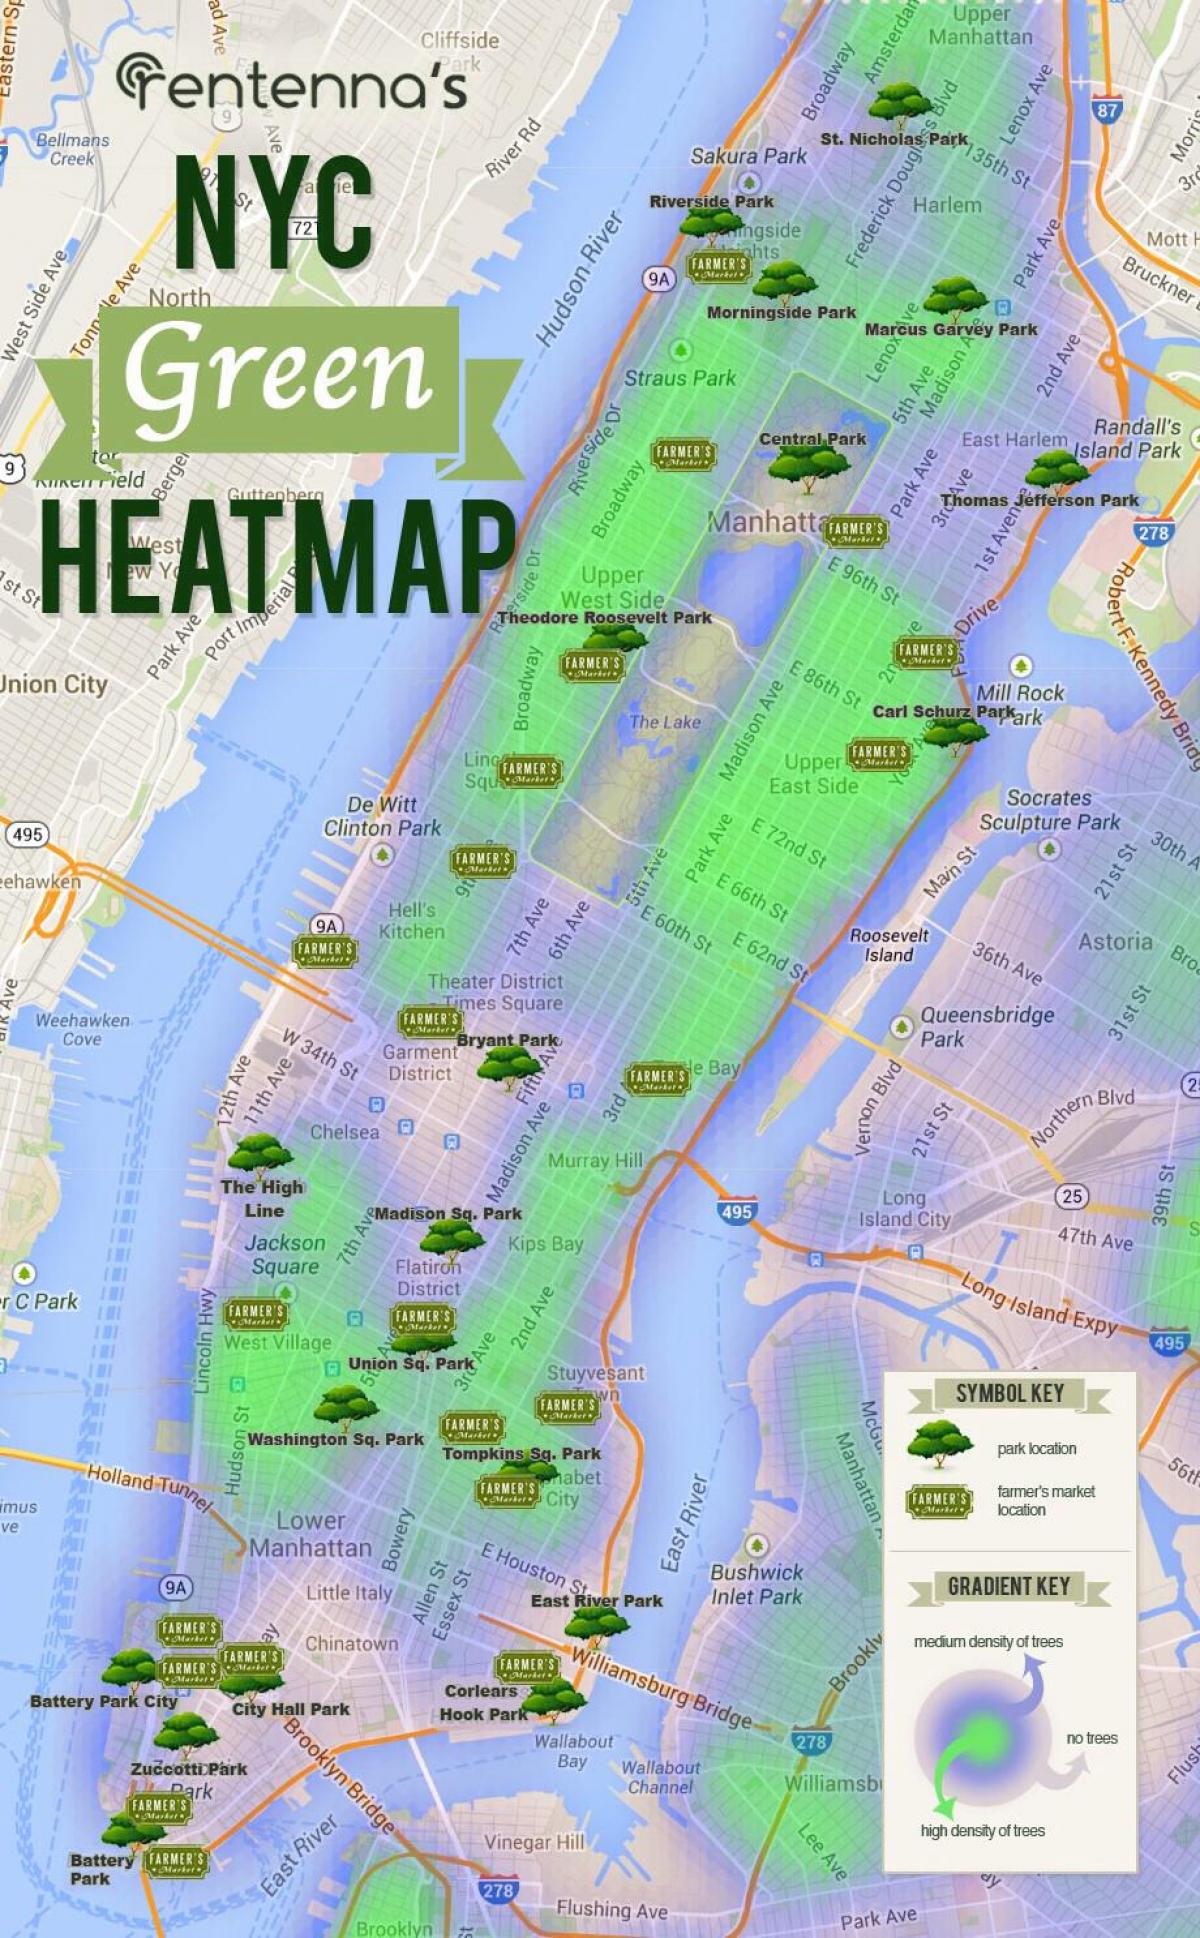 zemljevid Manhattan parkov